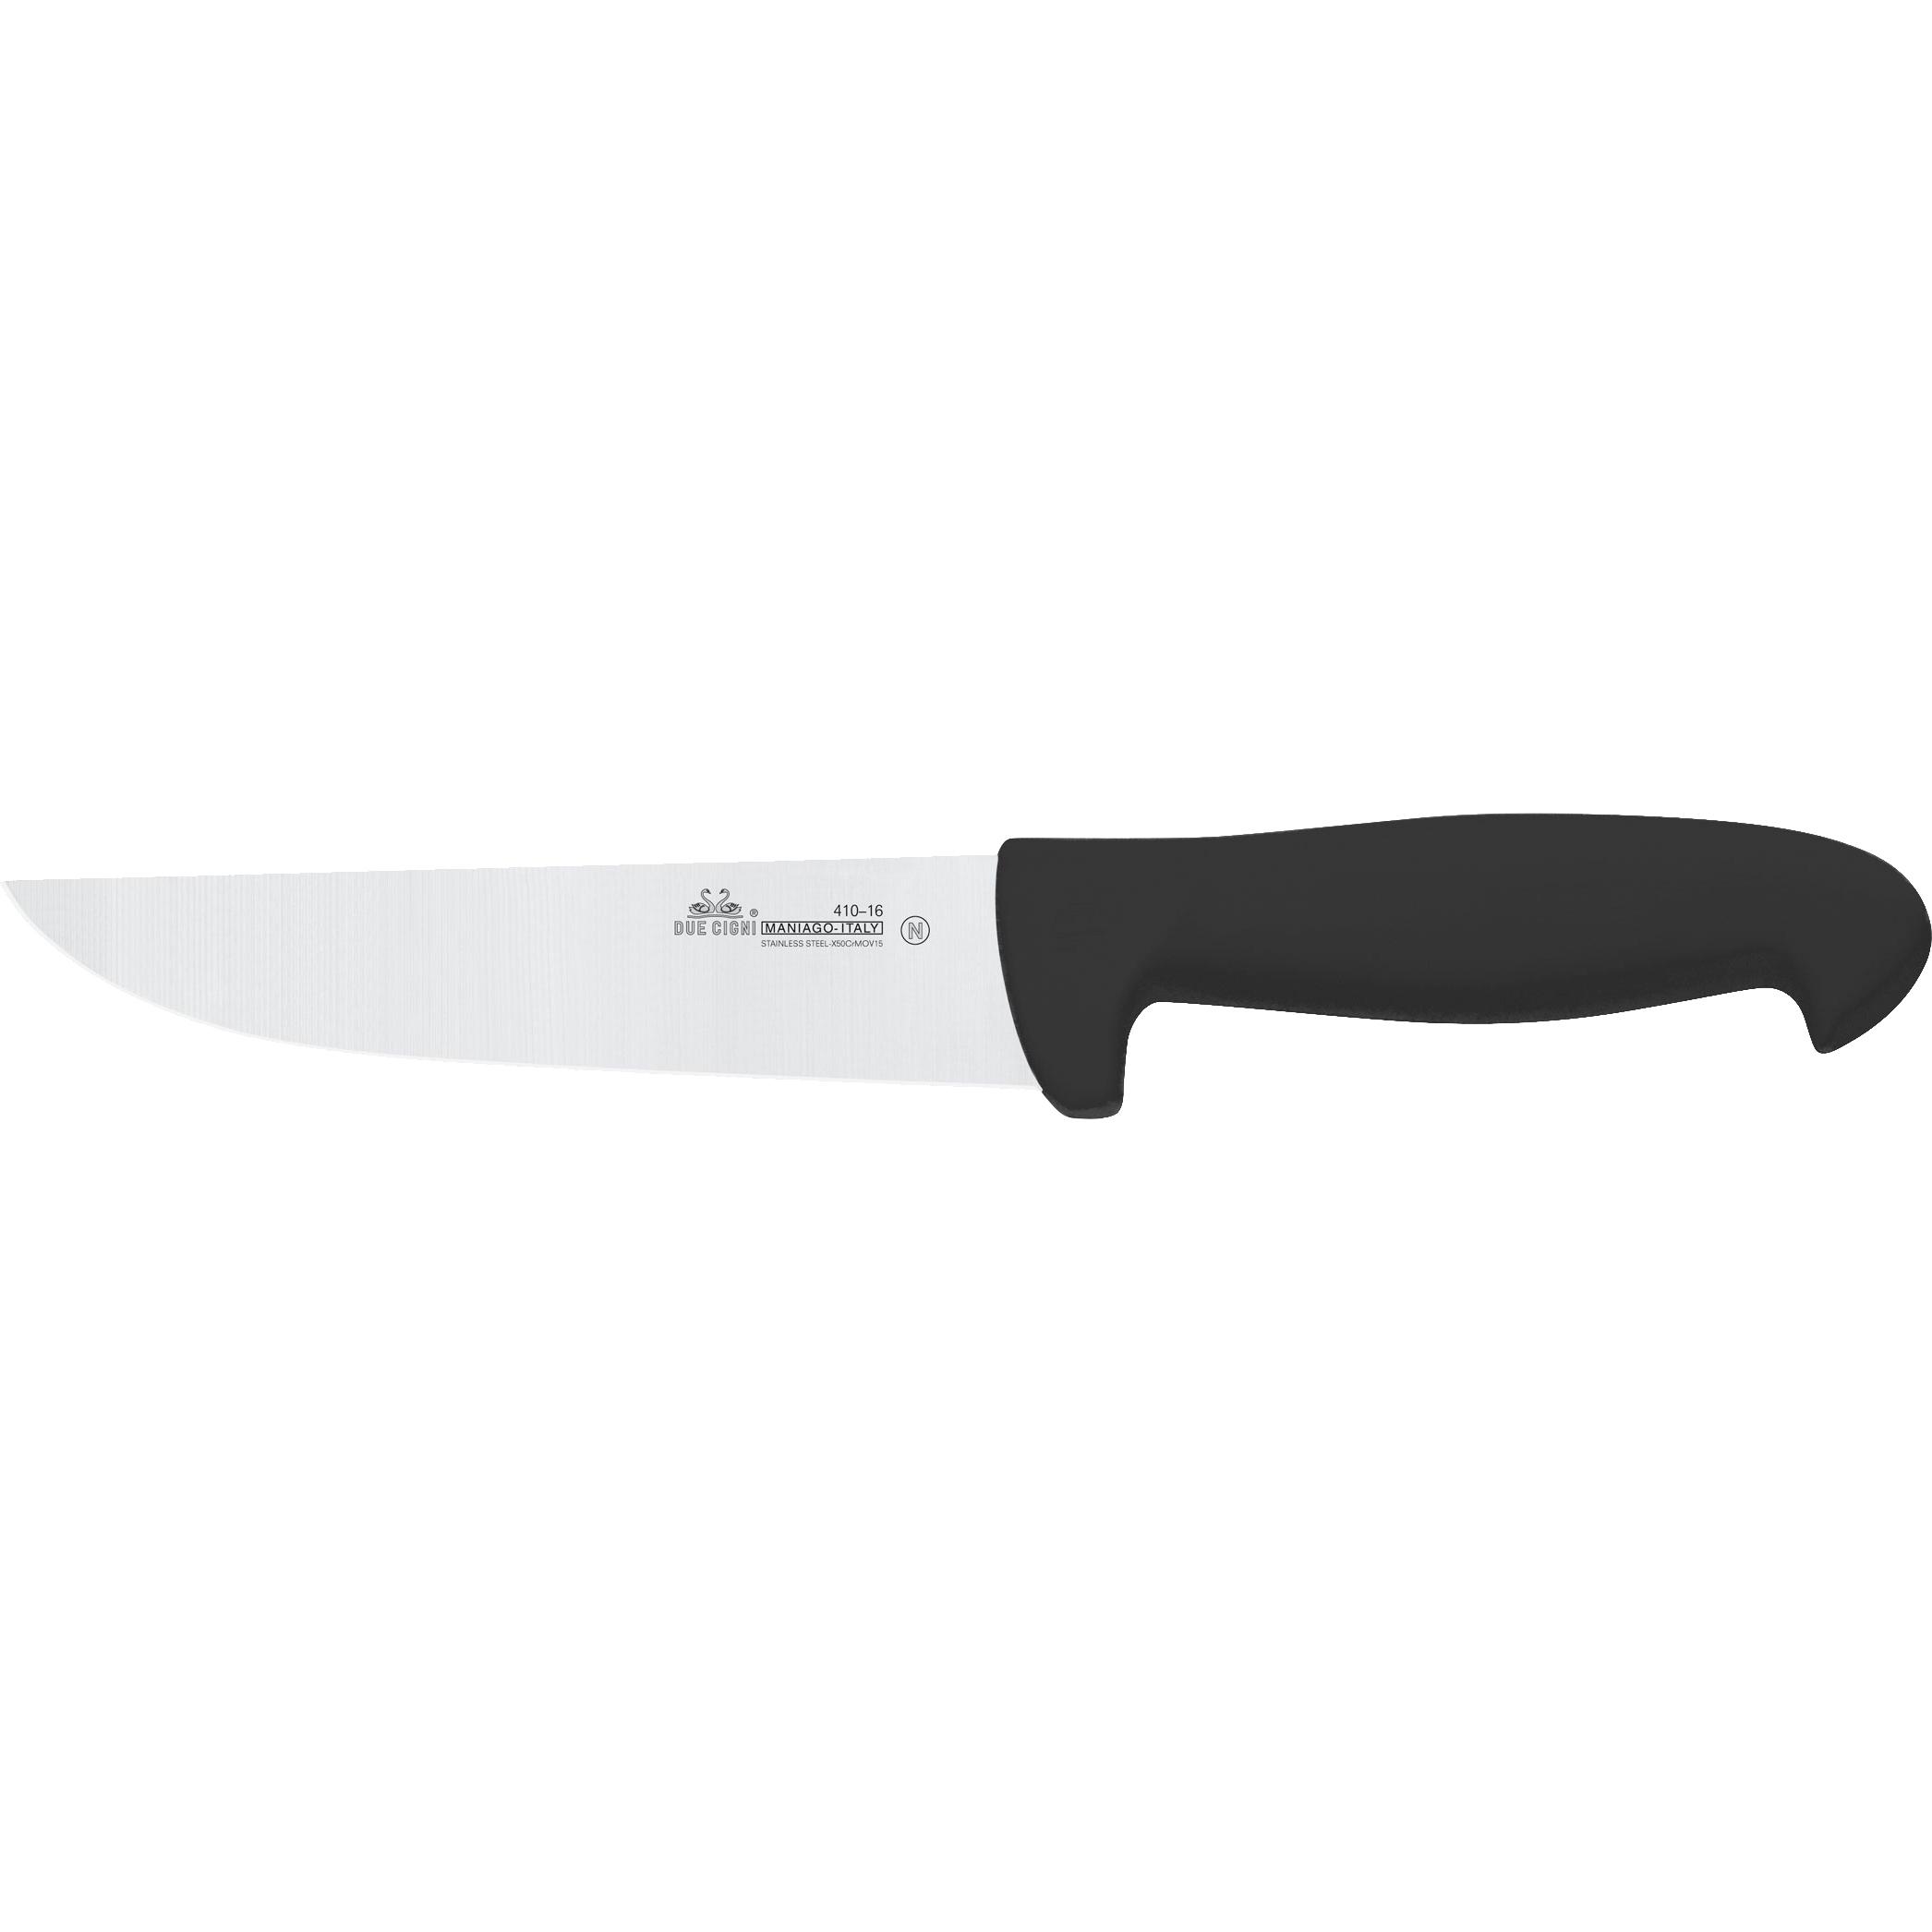 Нож кухонный Due Cigni Professional Butcher Knife 140 мм. Цвет - черный 2C 410/16 N 1904.00.99